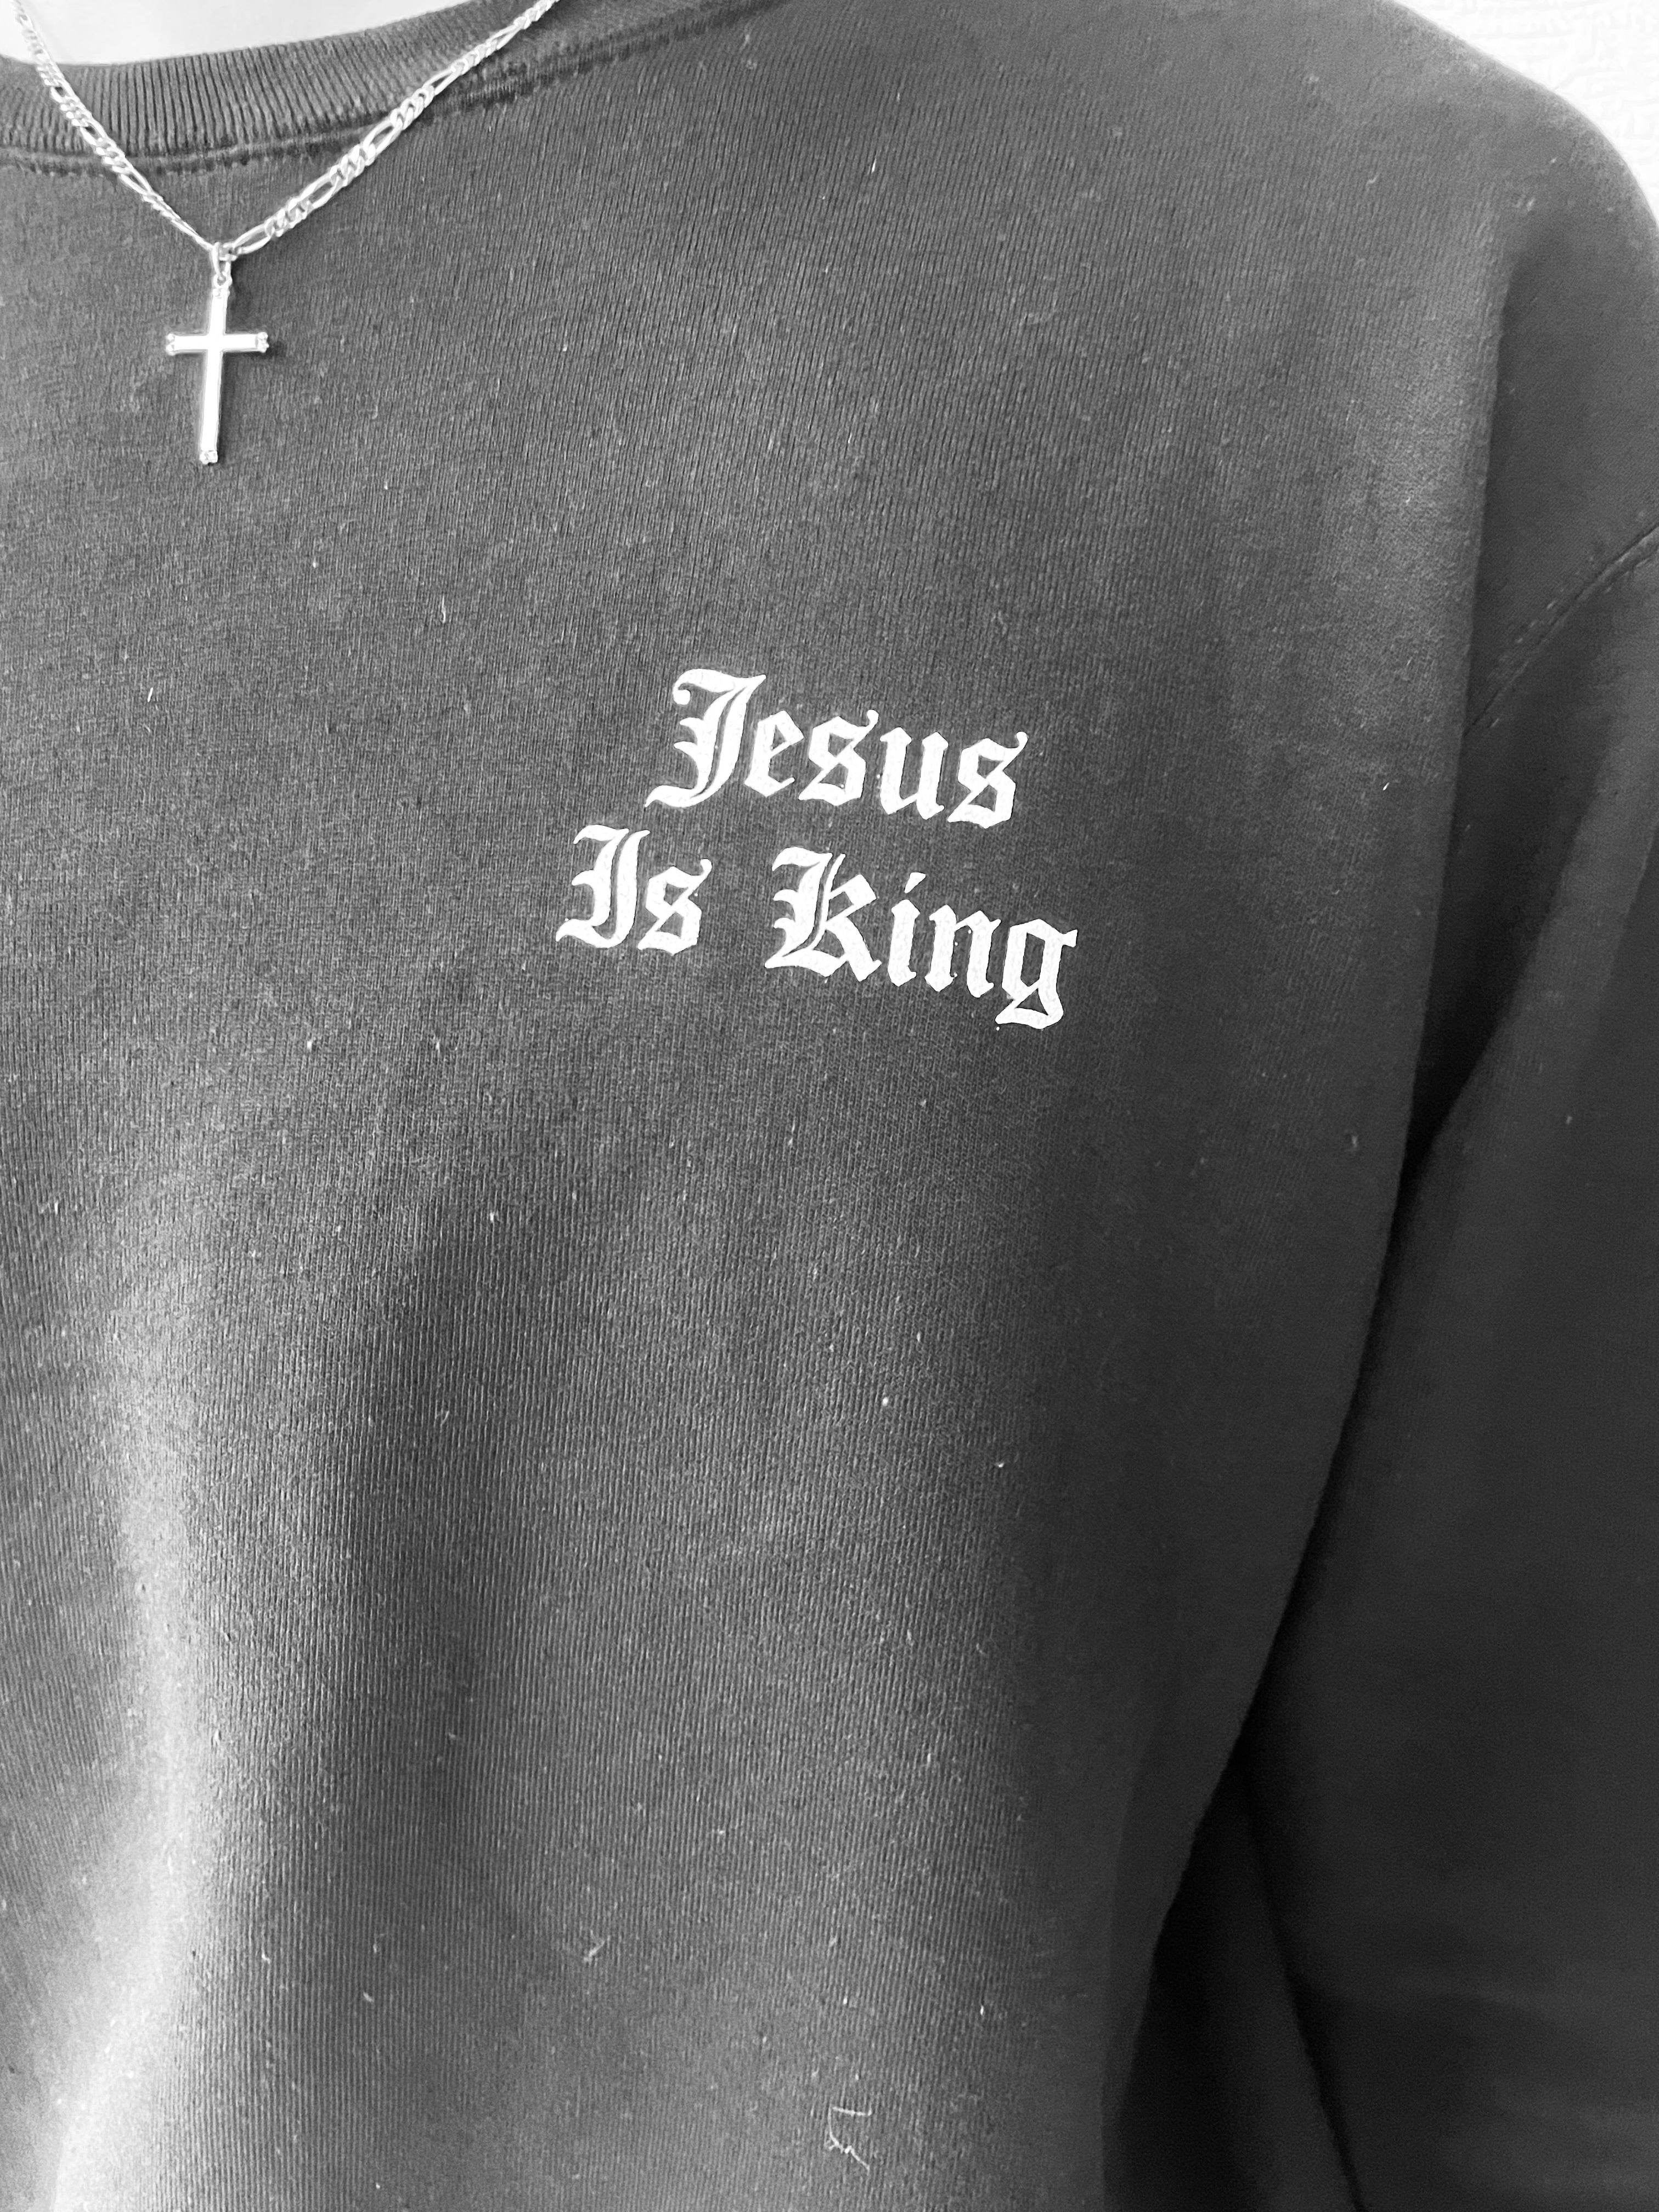 Jesus is King Black Sweatshirt (Unisex)